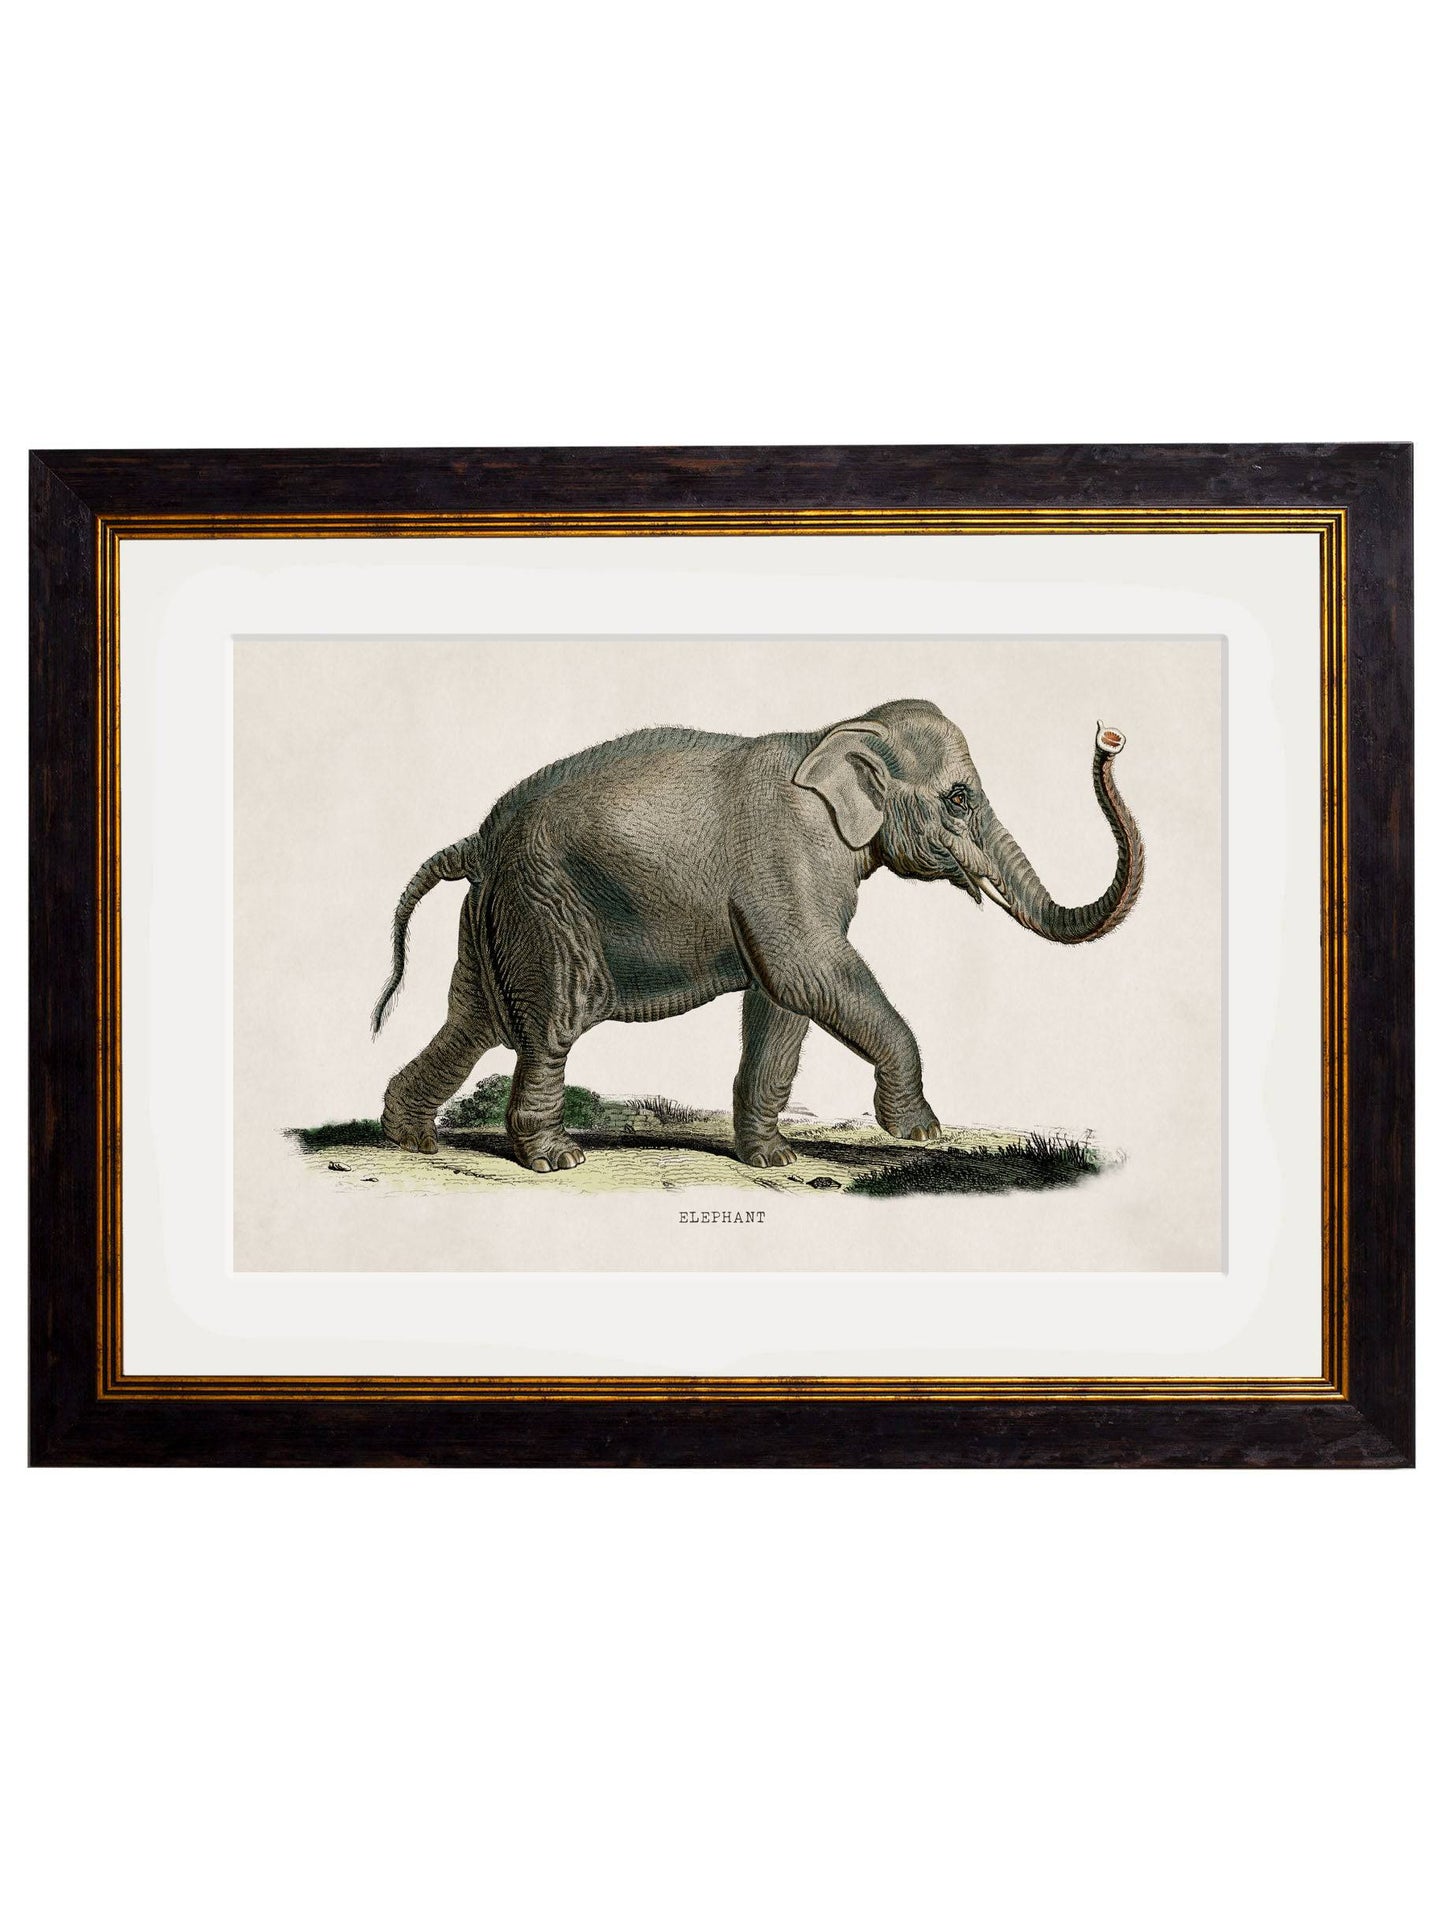 C.1846 Elephants for sale - Woodcock and Cavendish